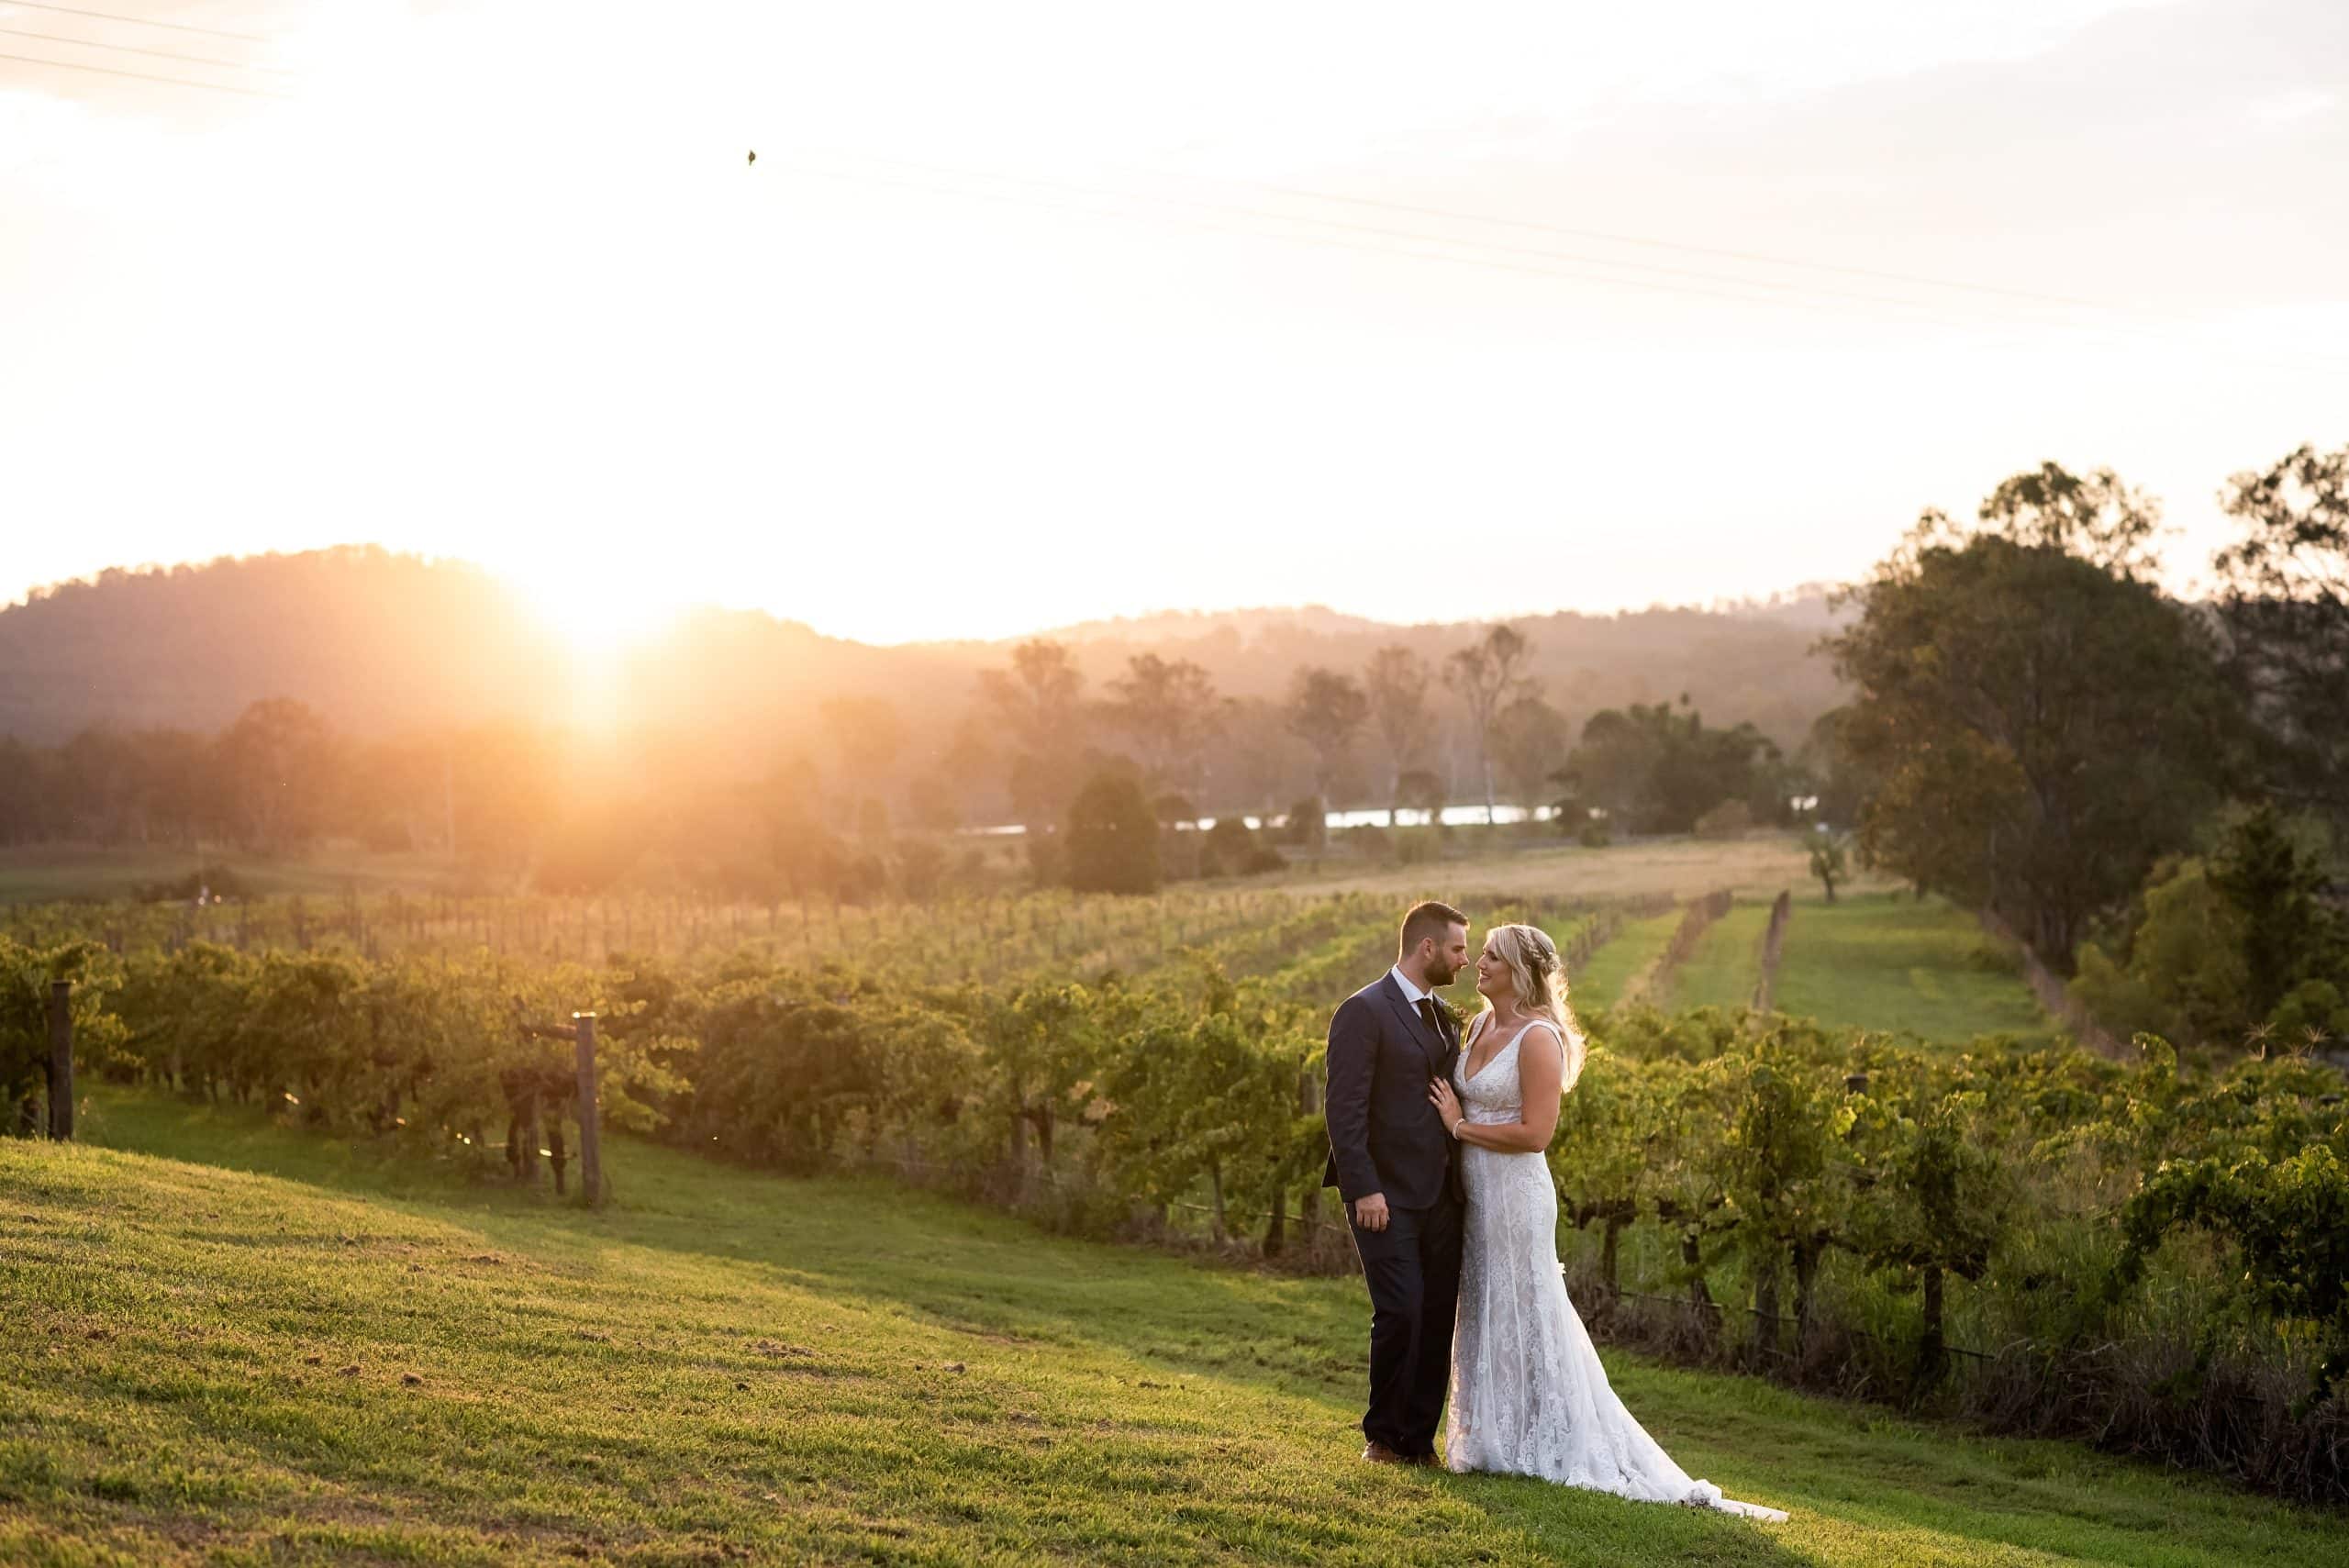 Albert River Wines, Tamborine with bride and groom at sunset.